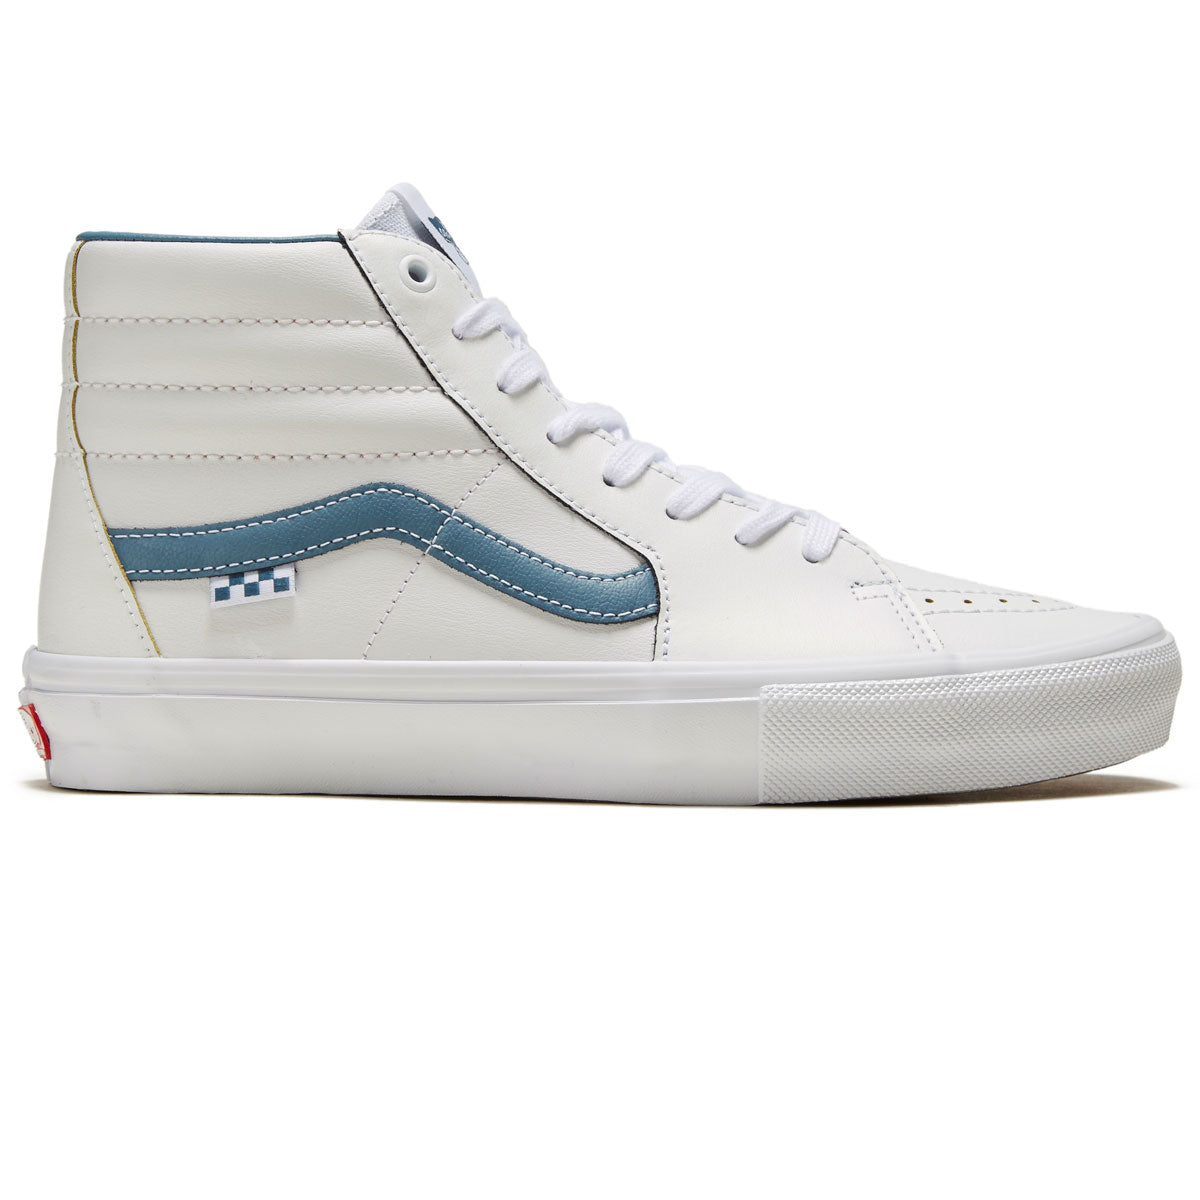 Vans Skate Sk8-hi Shoes - Slushie White/Blue image 1